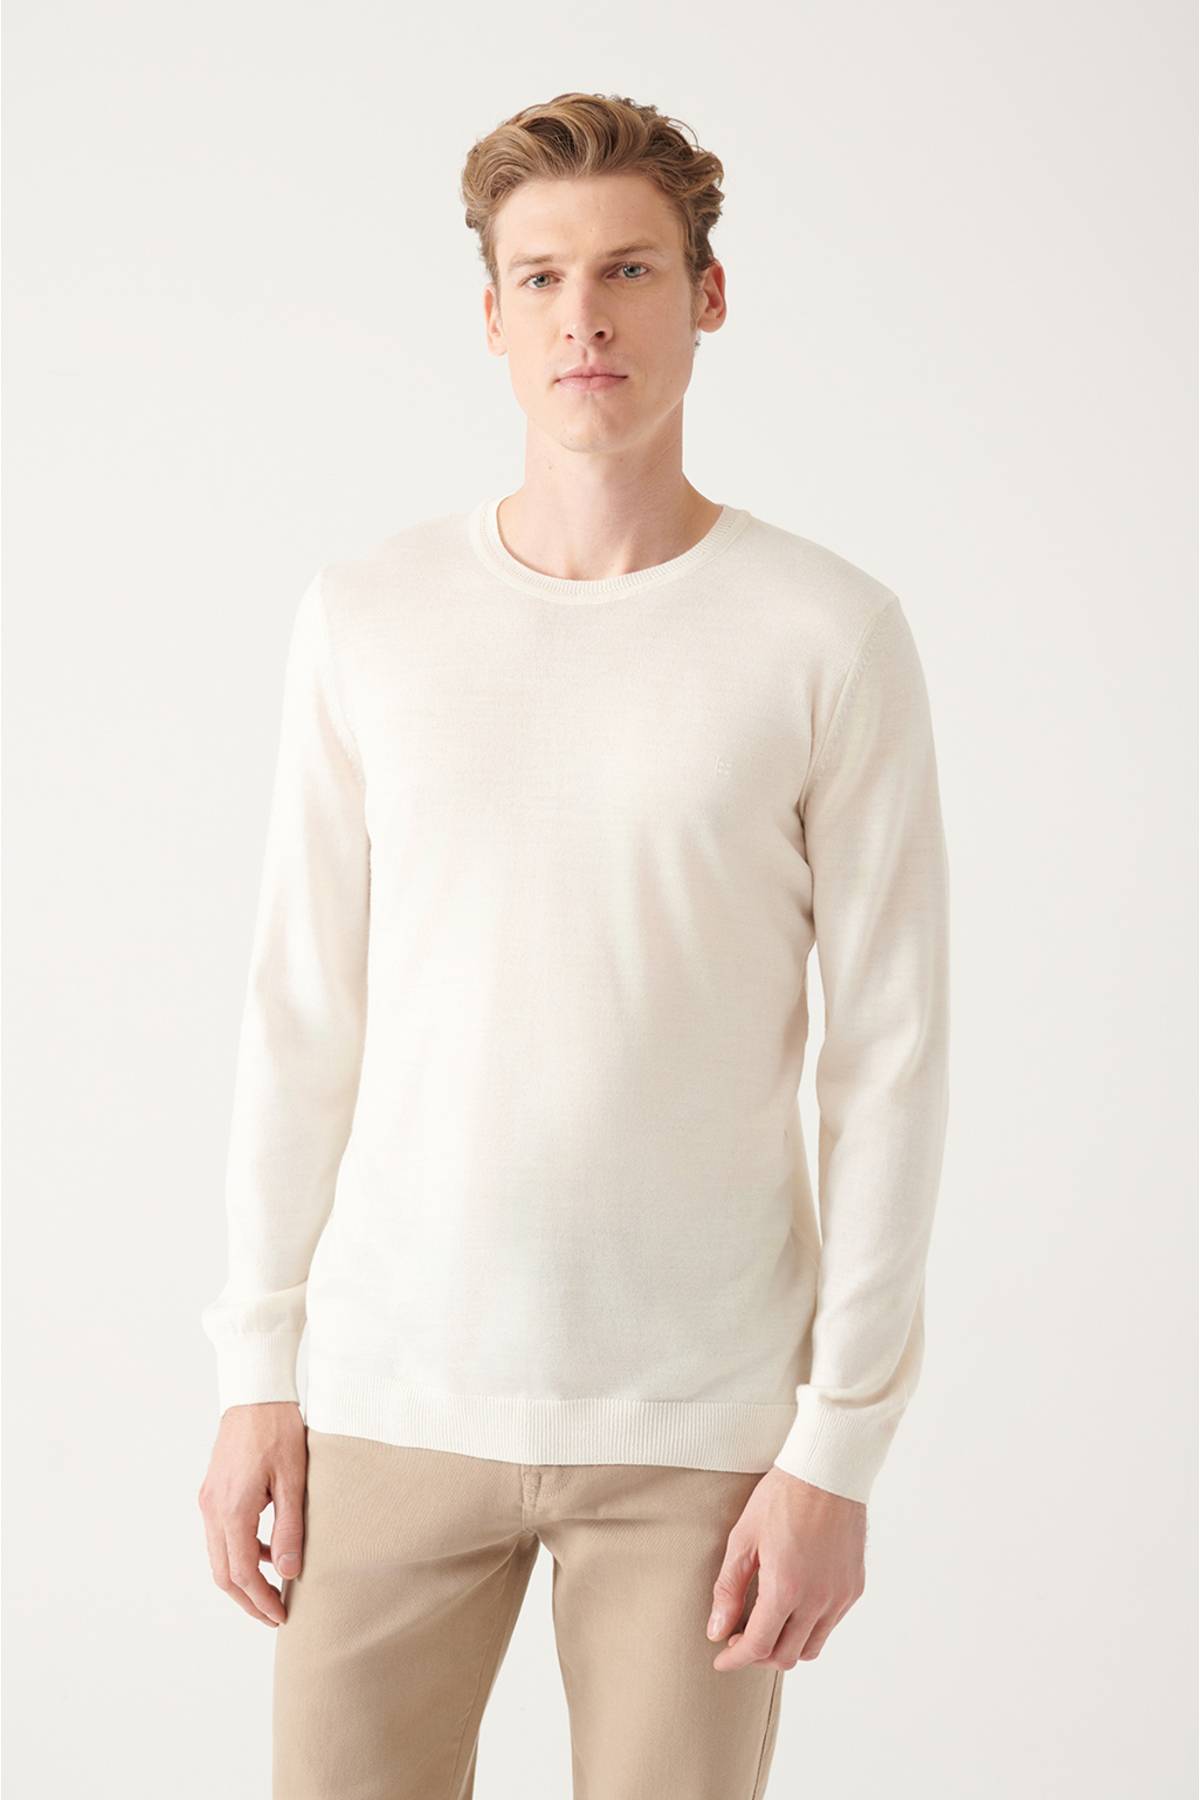 Levně Avva Men's White Crew Neck Wool Blended Regular Fit Knitwear Sweater